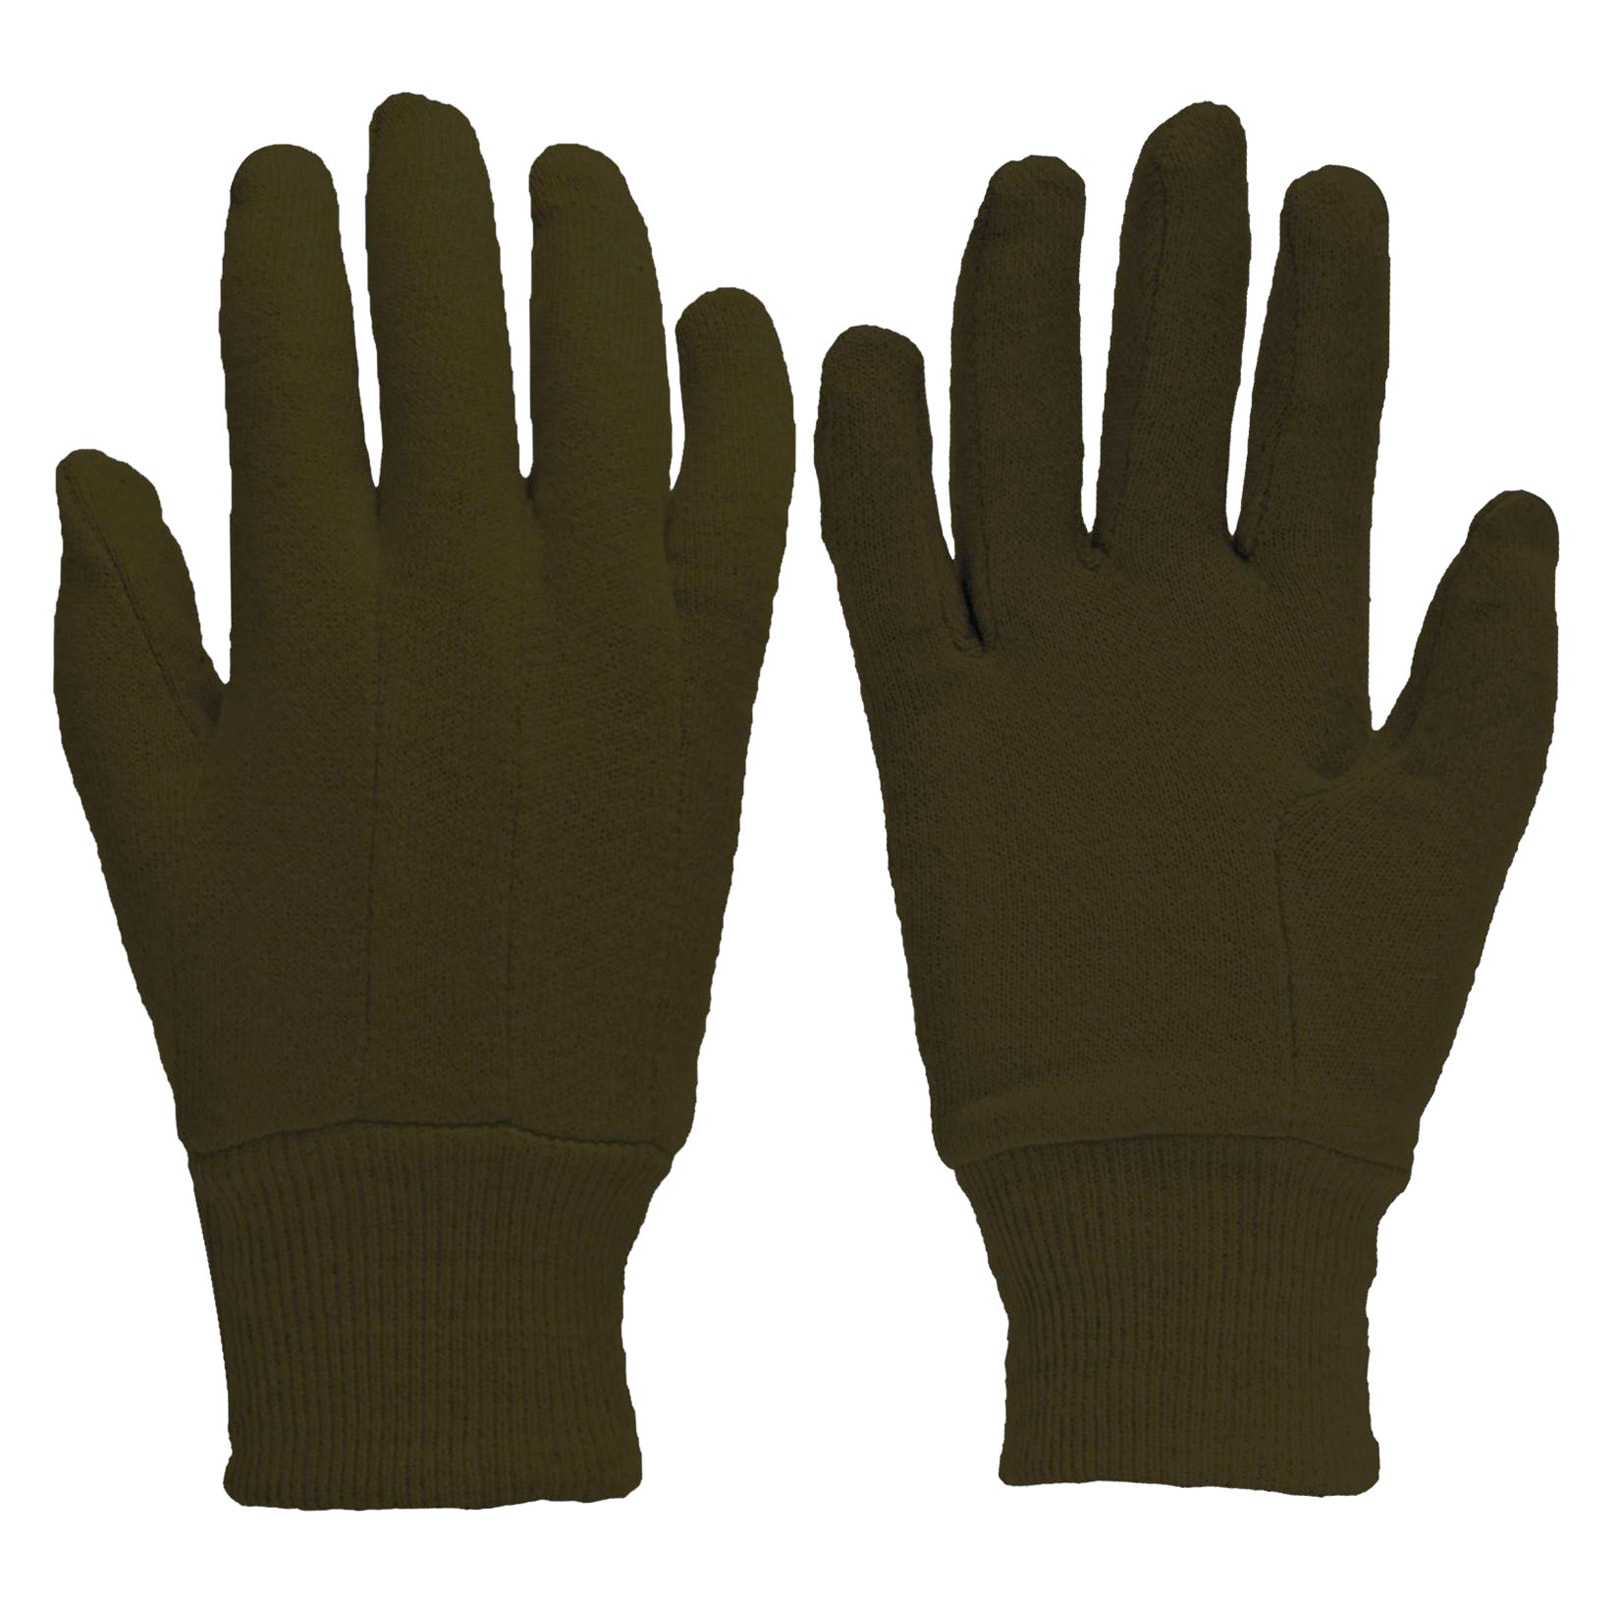 True Grip 9116-26 Cotton Jersey Gloves, Medium - image 2 of 2